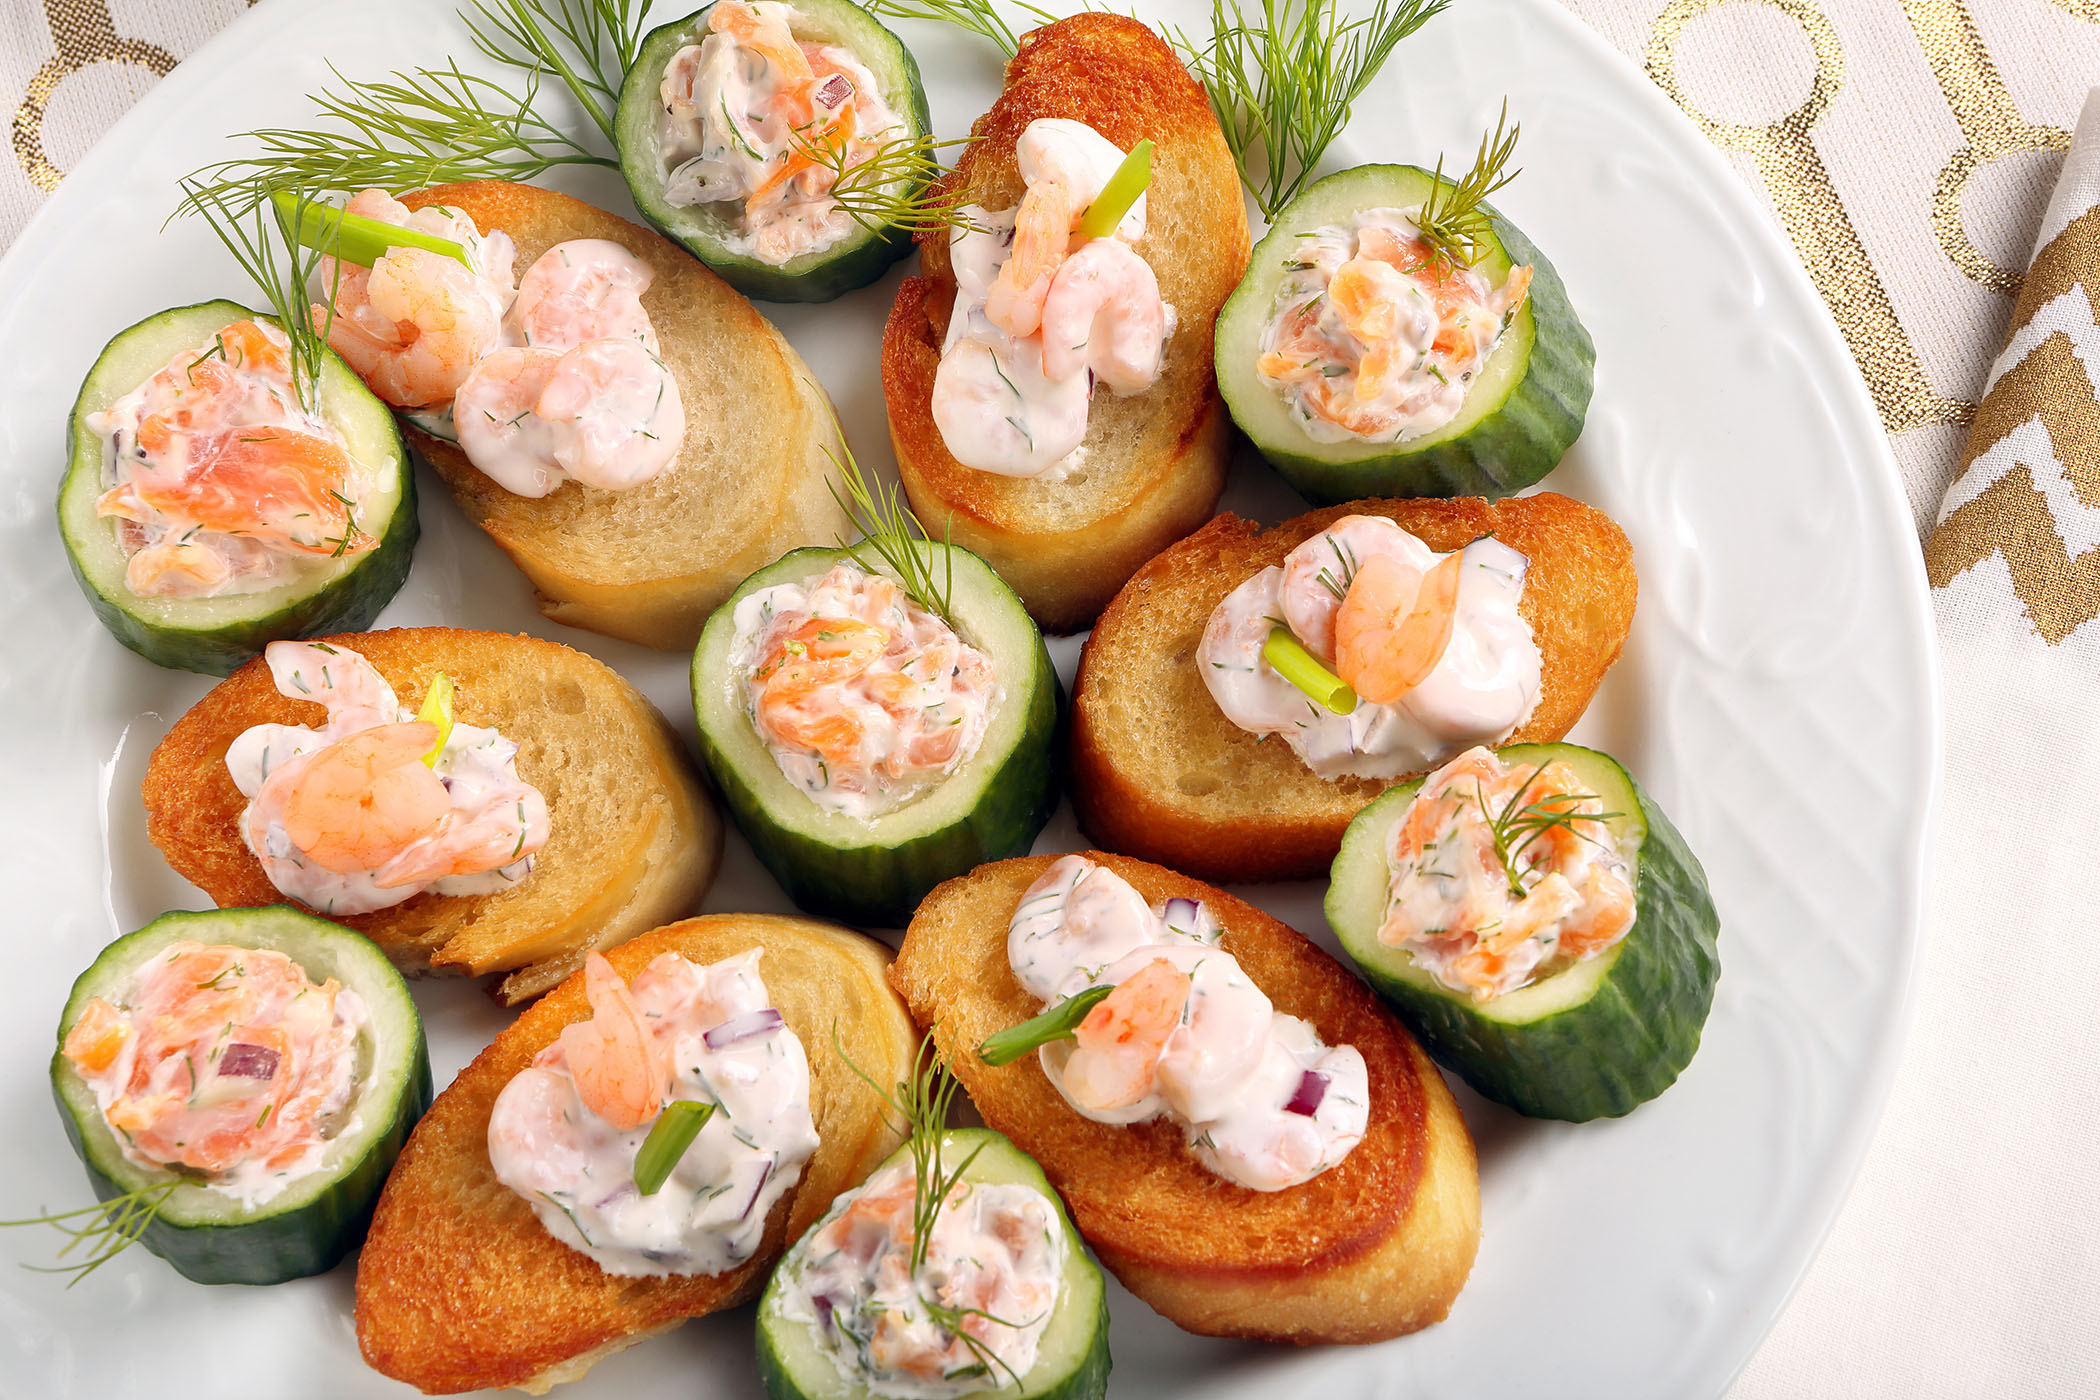 Shrimp and Salmon Creamy Dill Spread Website